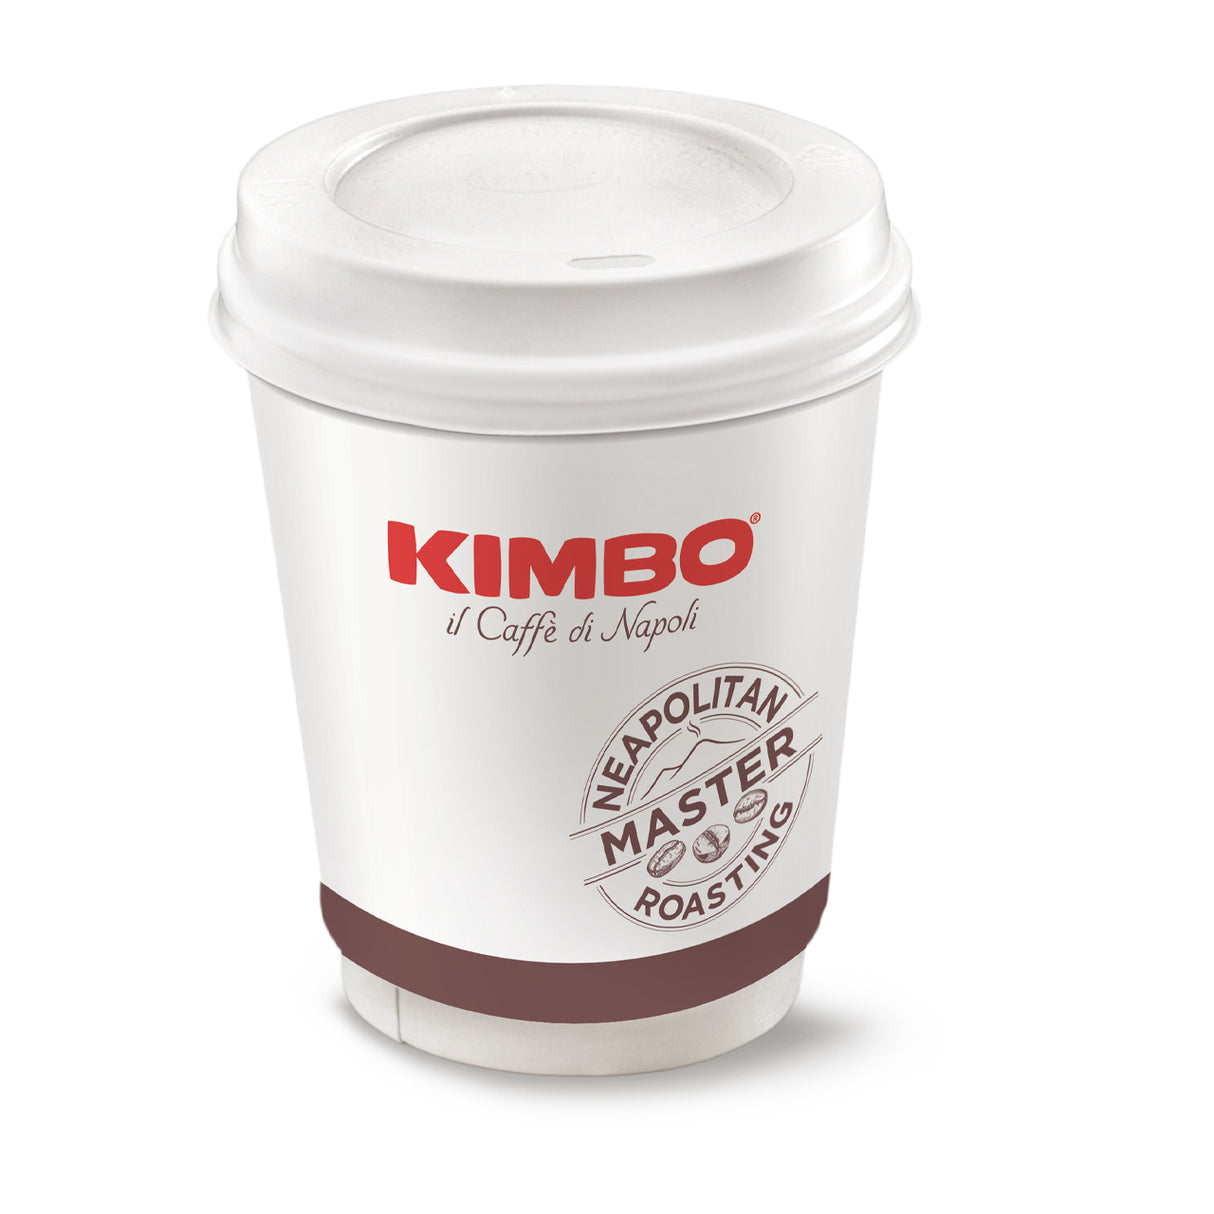 Kimbo 12oz Double Wall Cups (500 cups)